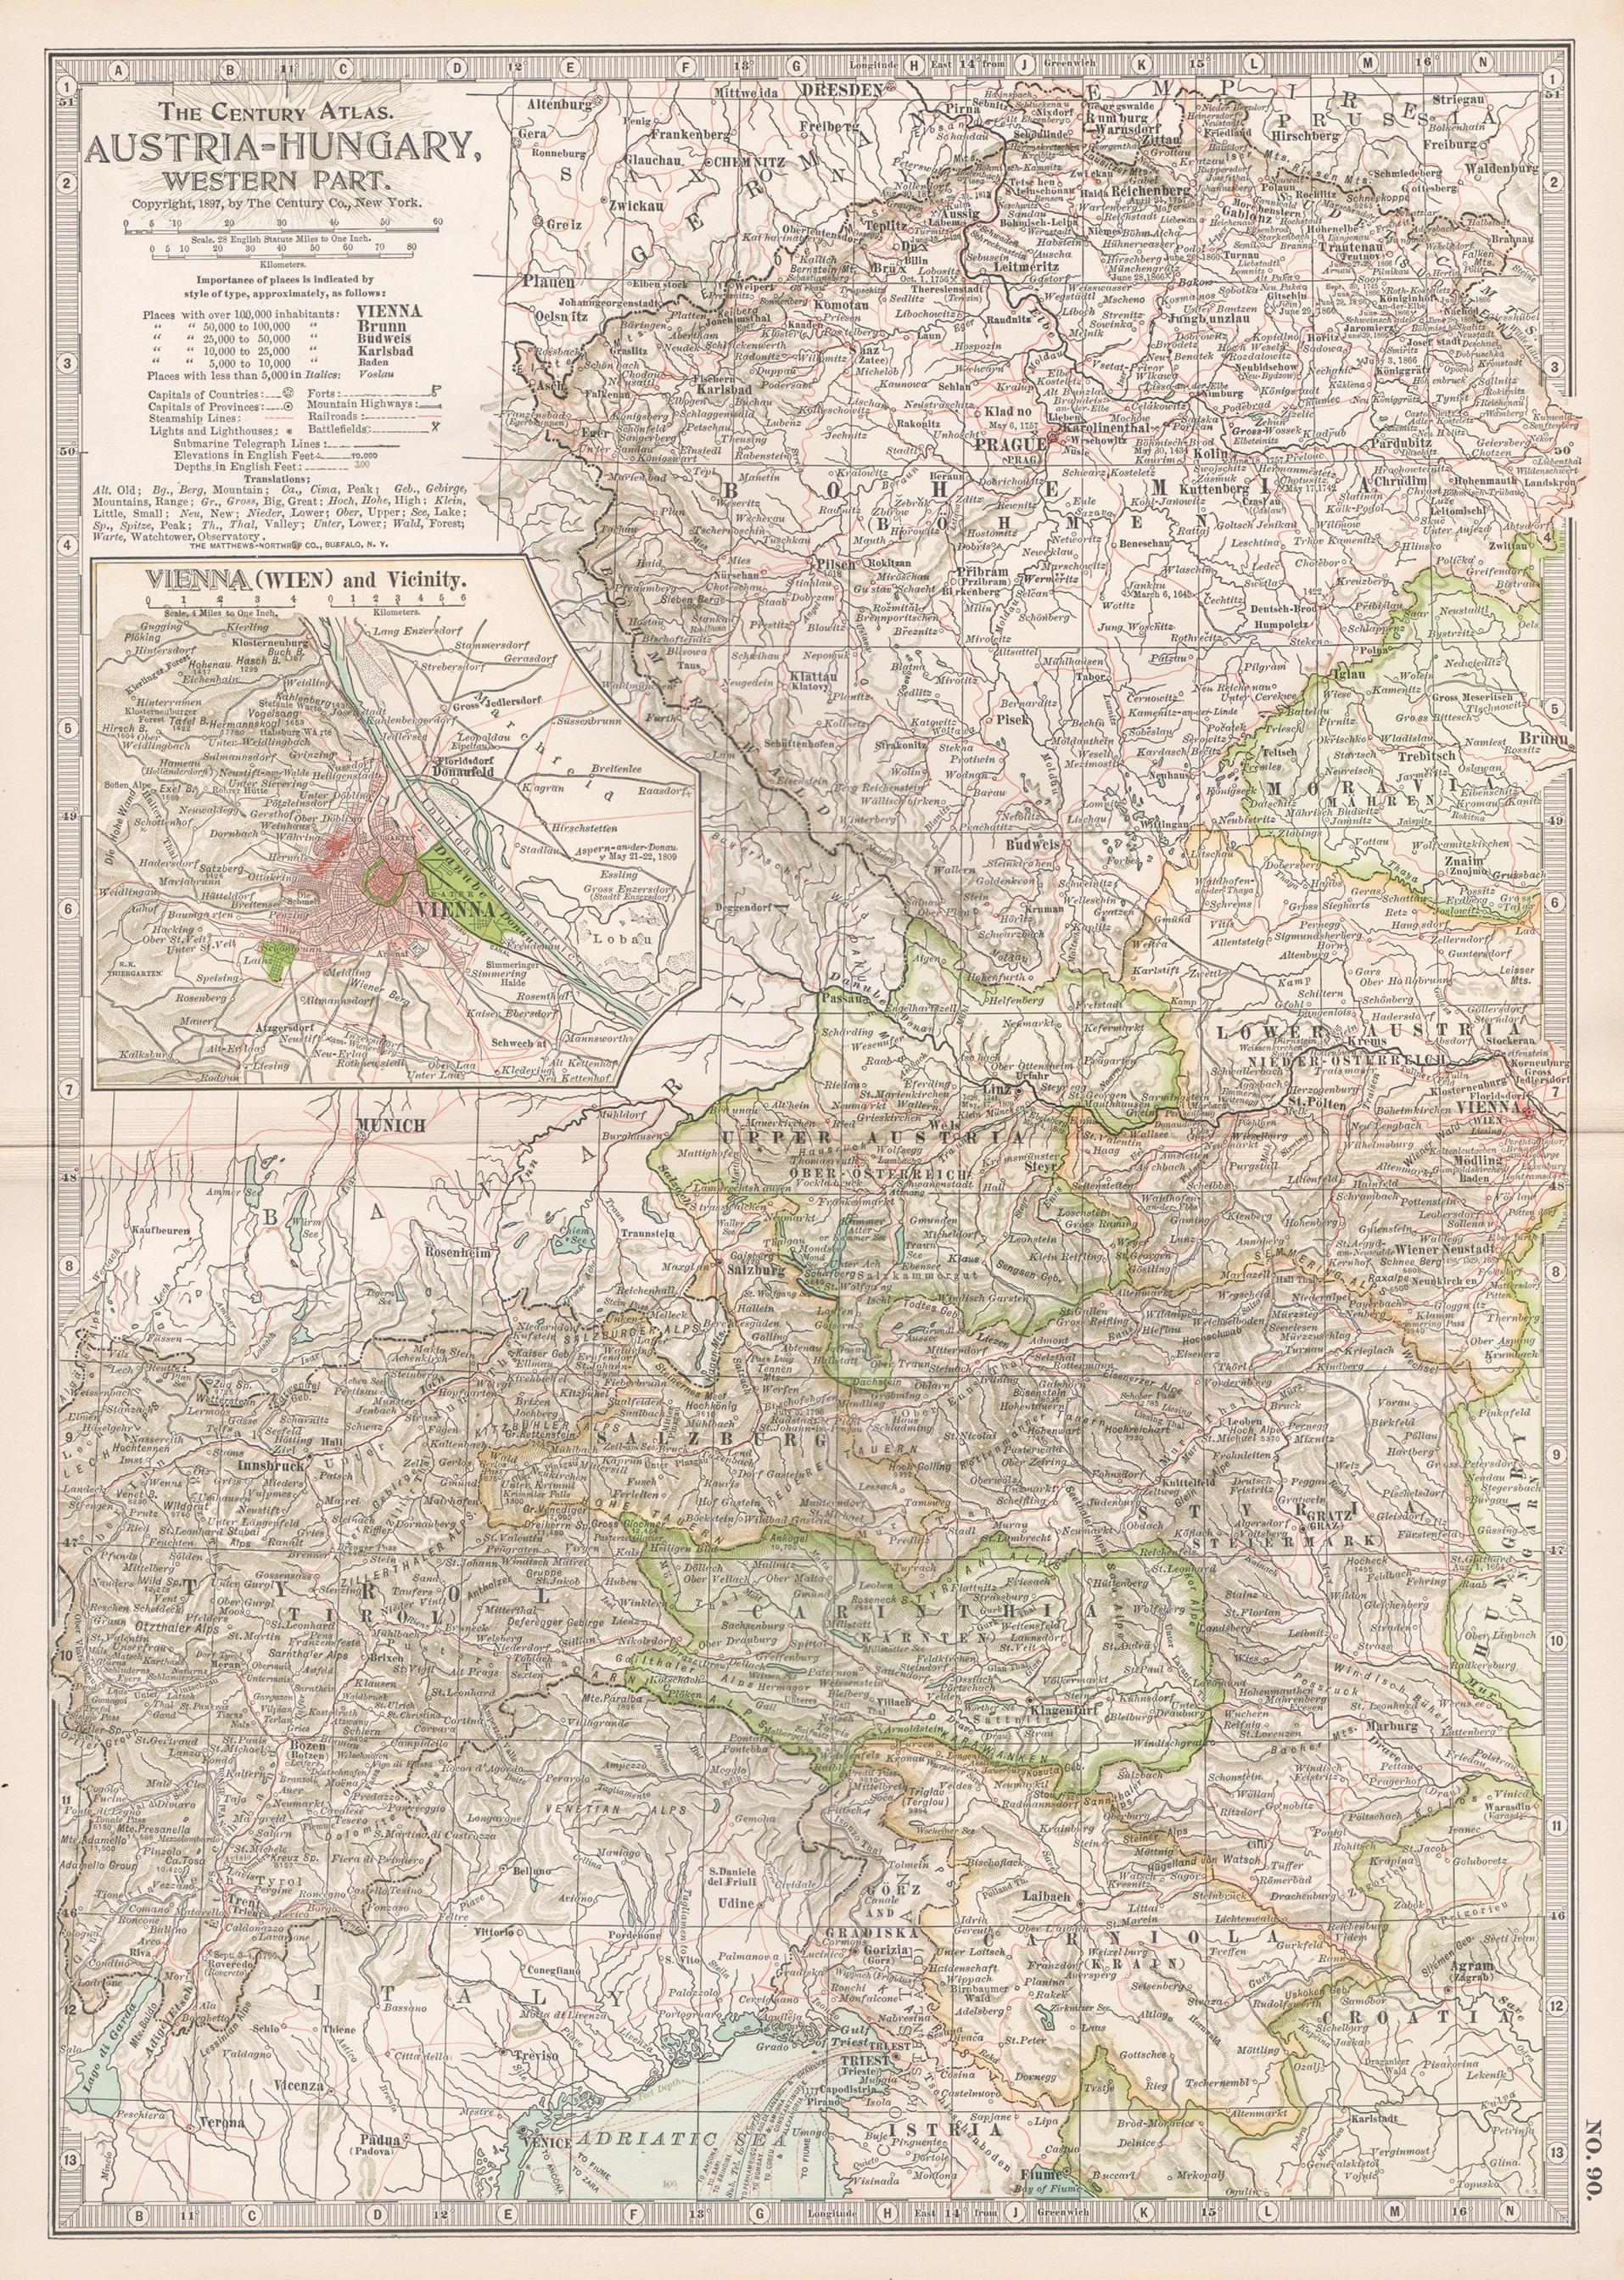 Unknown Print - Austria-Hungary, Western Part. Century Atlas antique vintage map